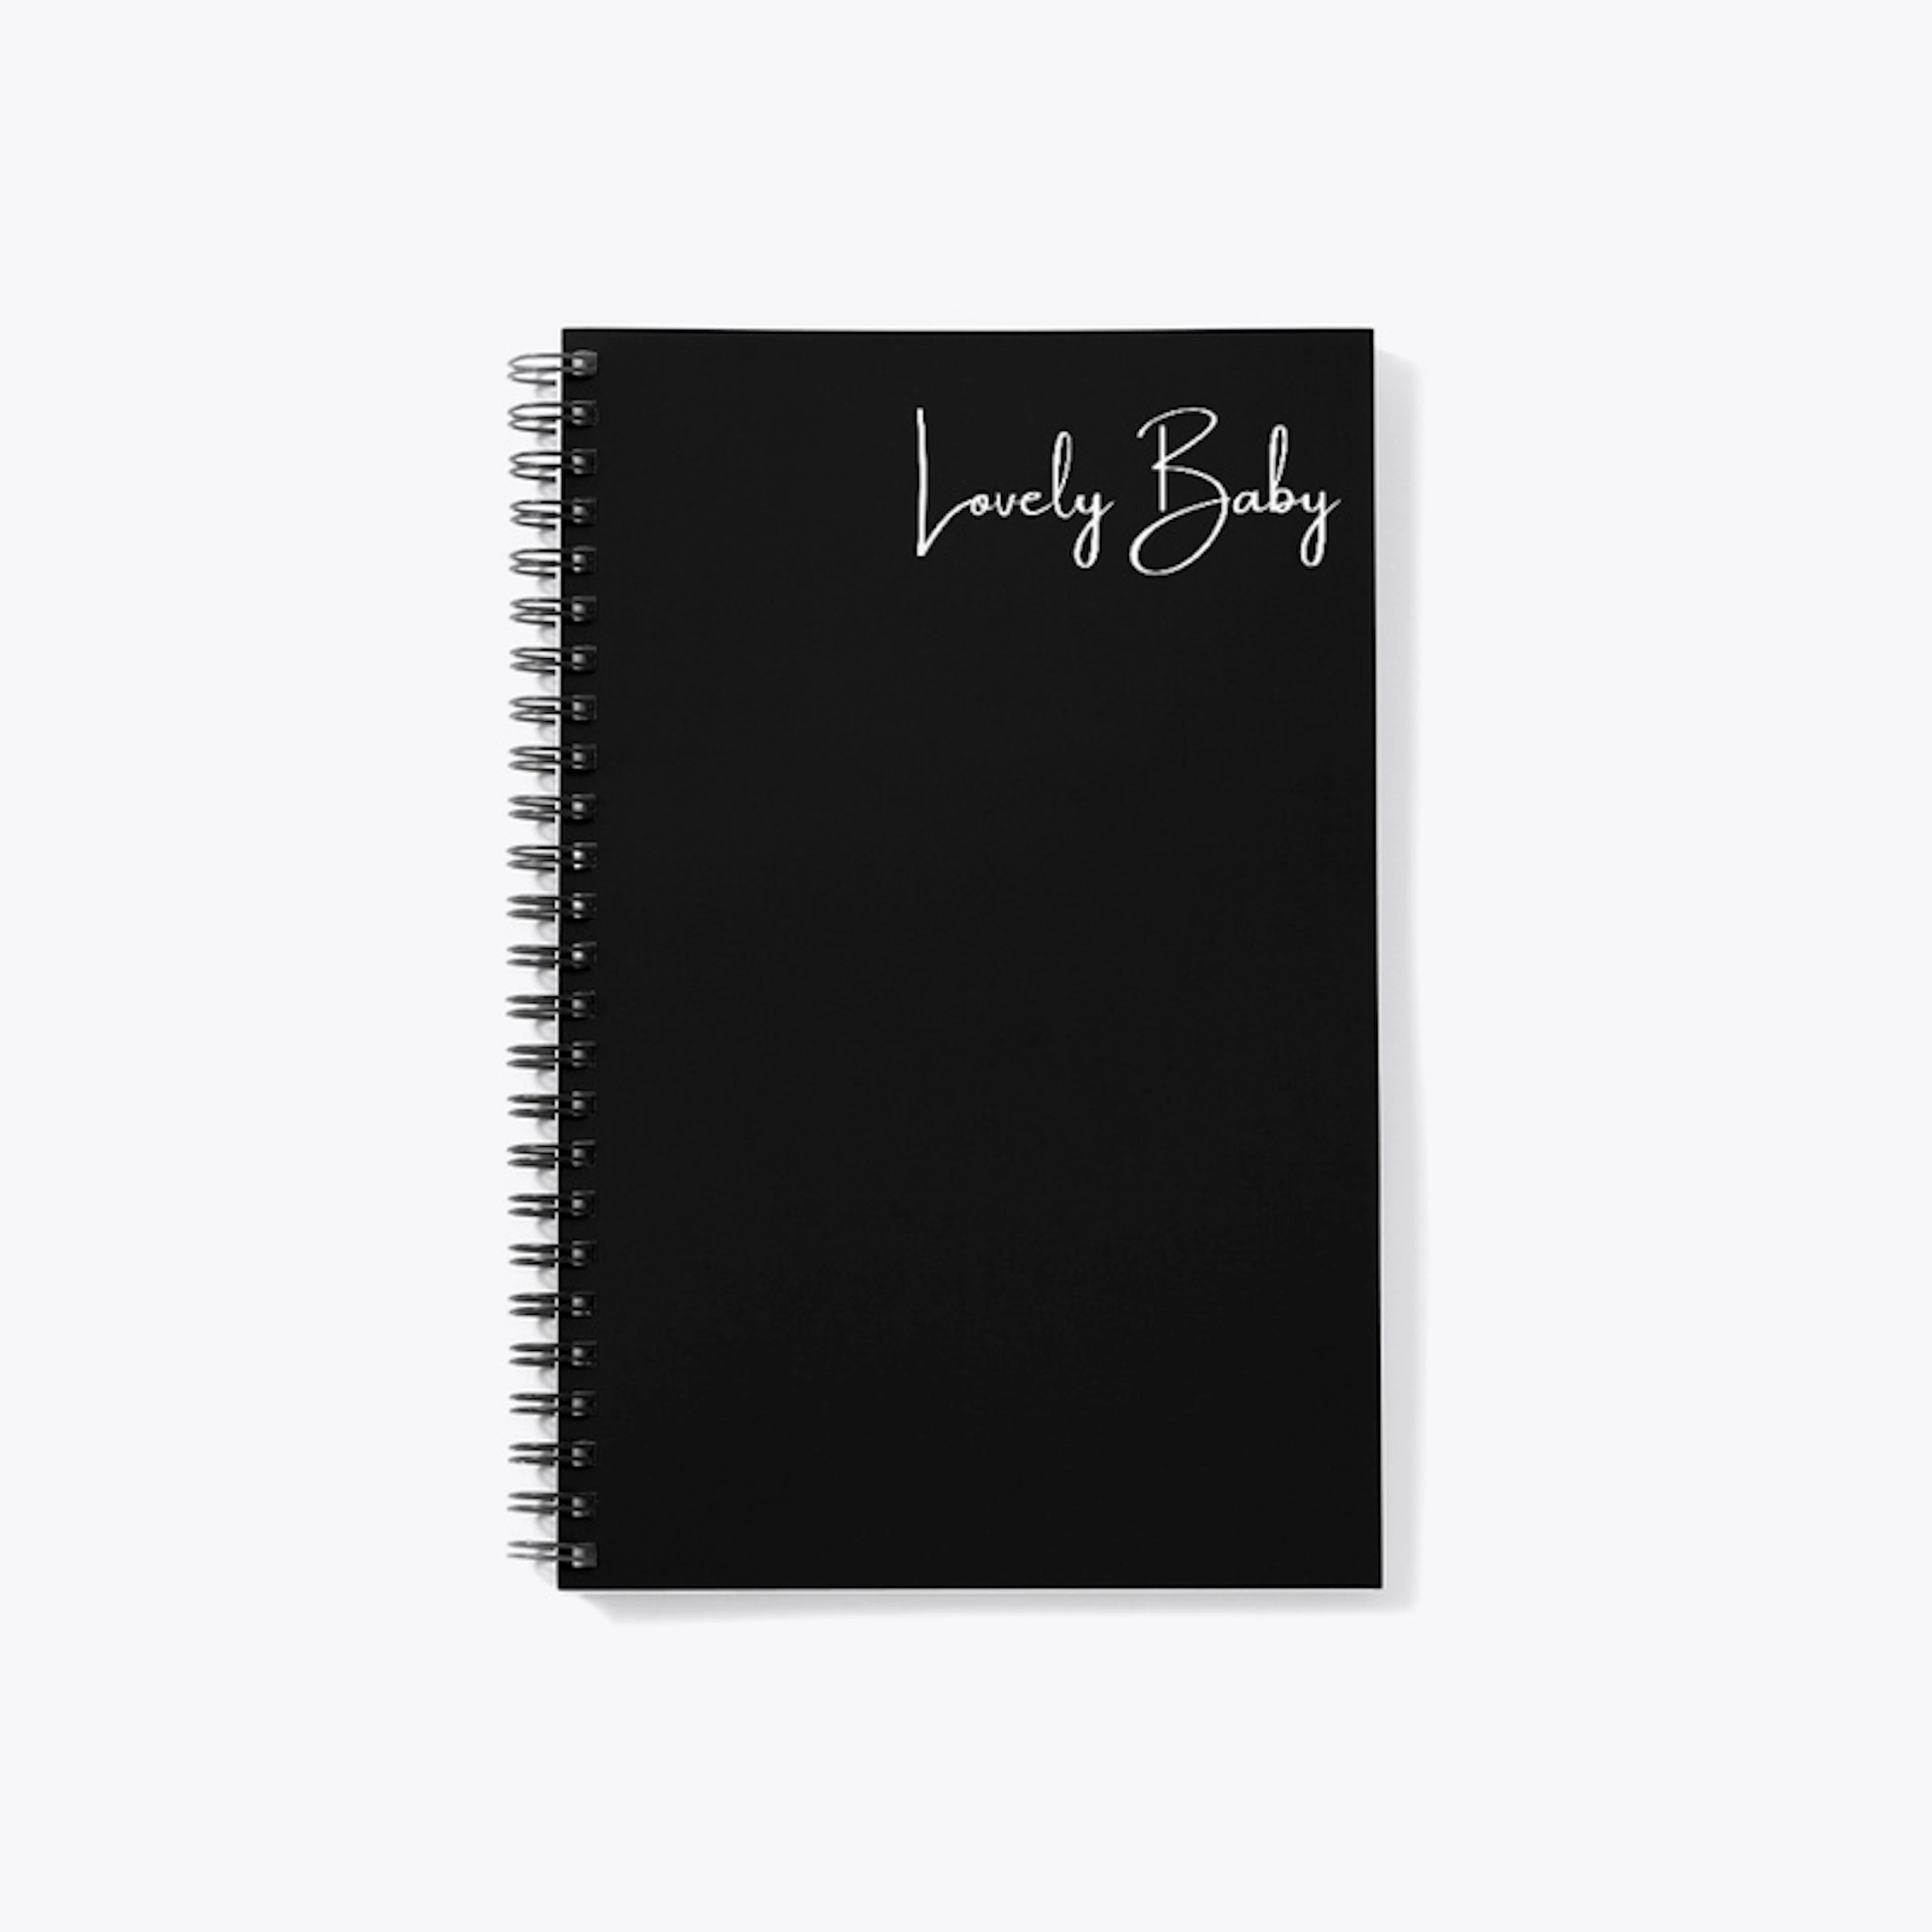 Lovely Baby Notebook